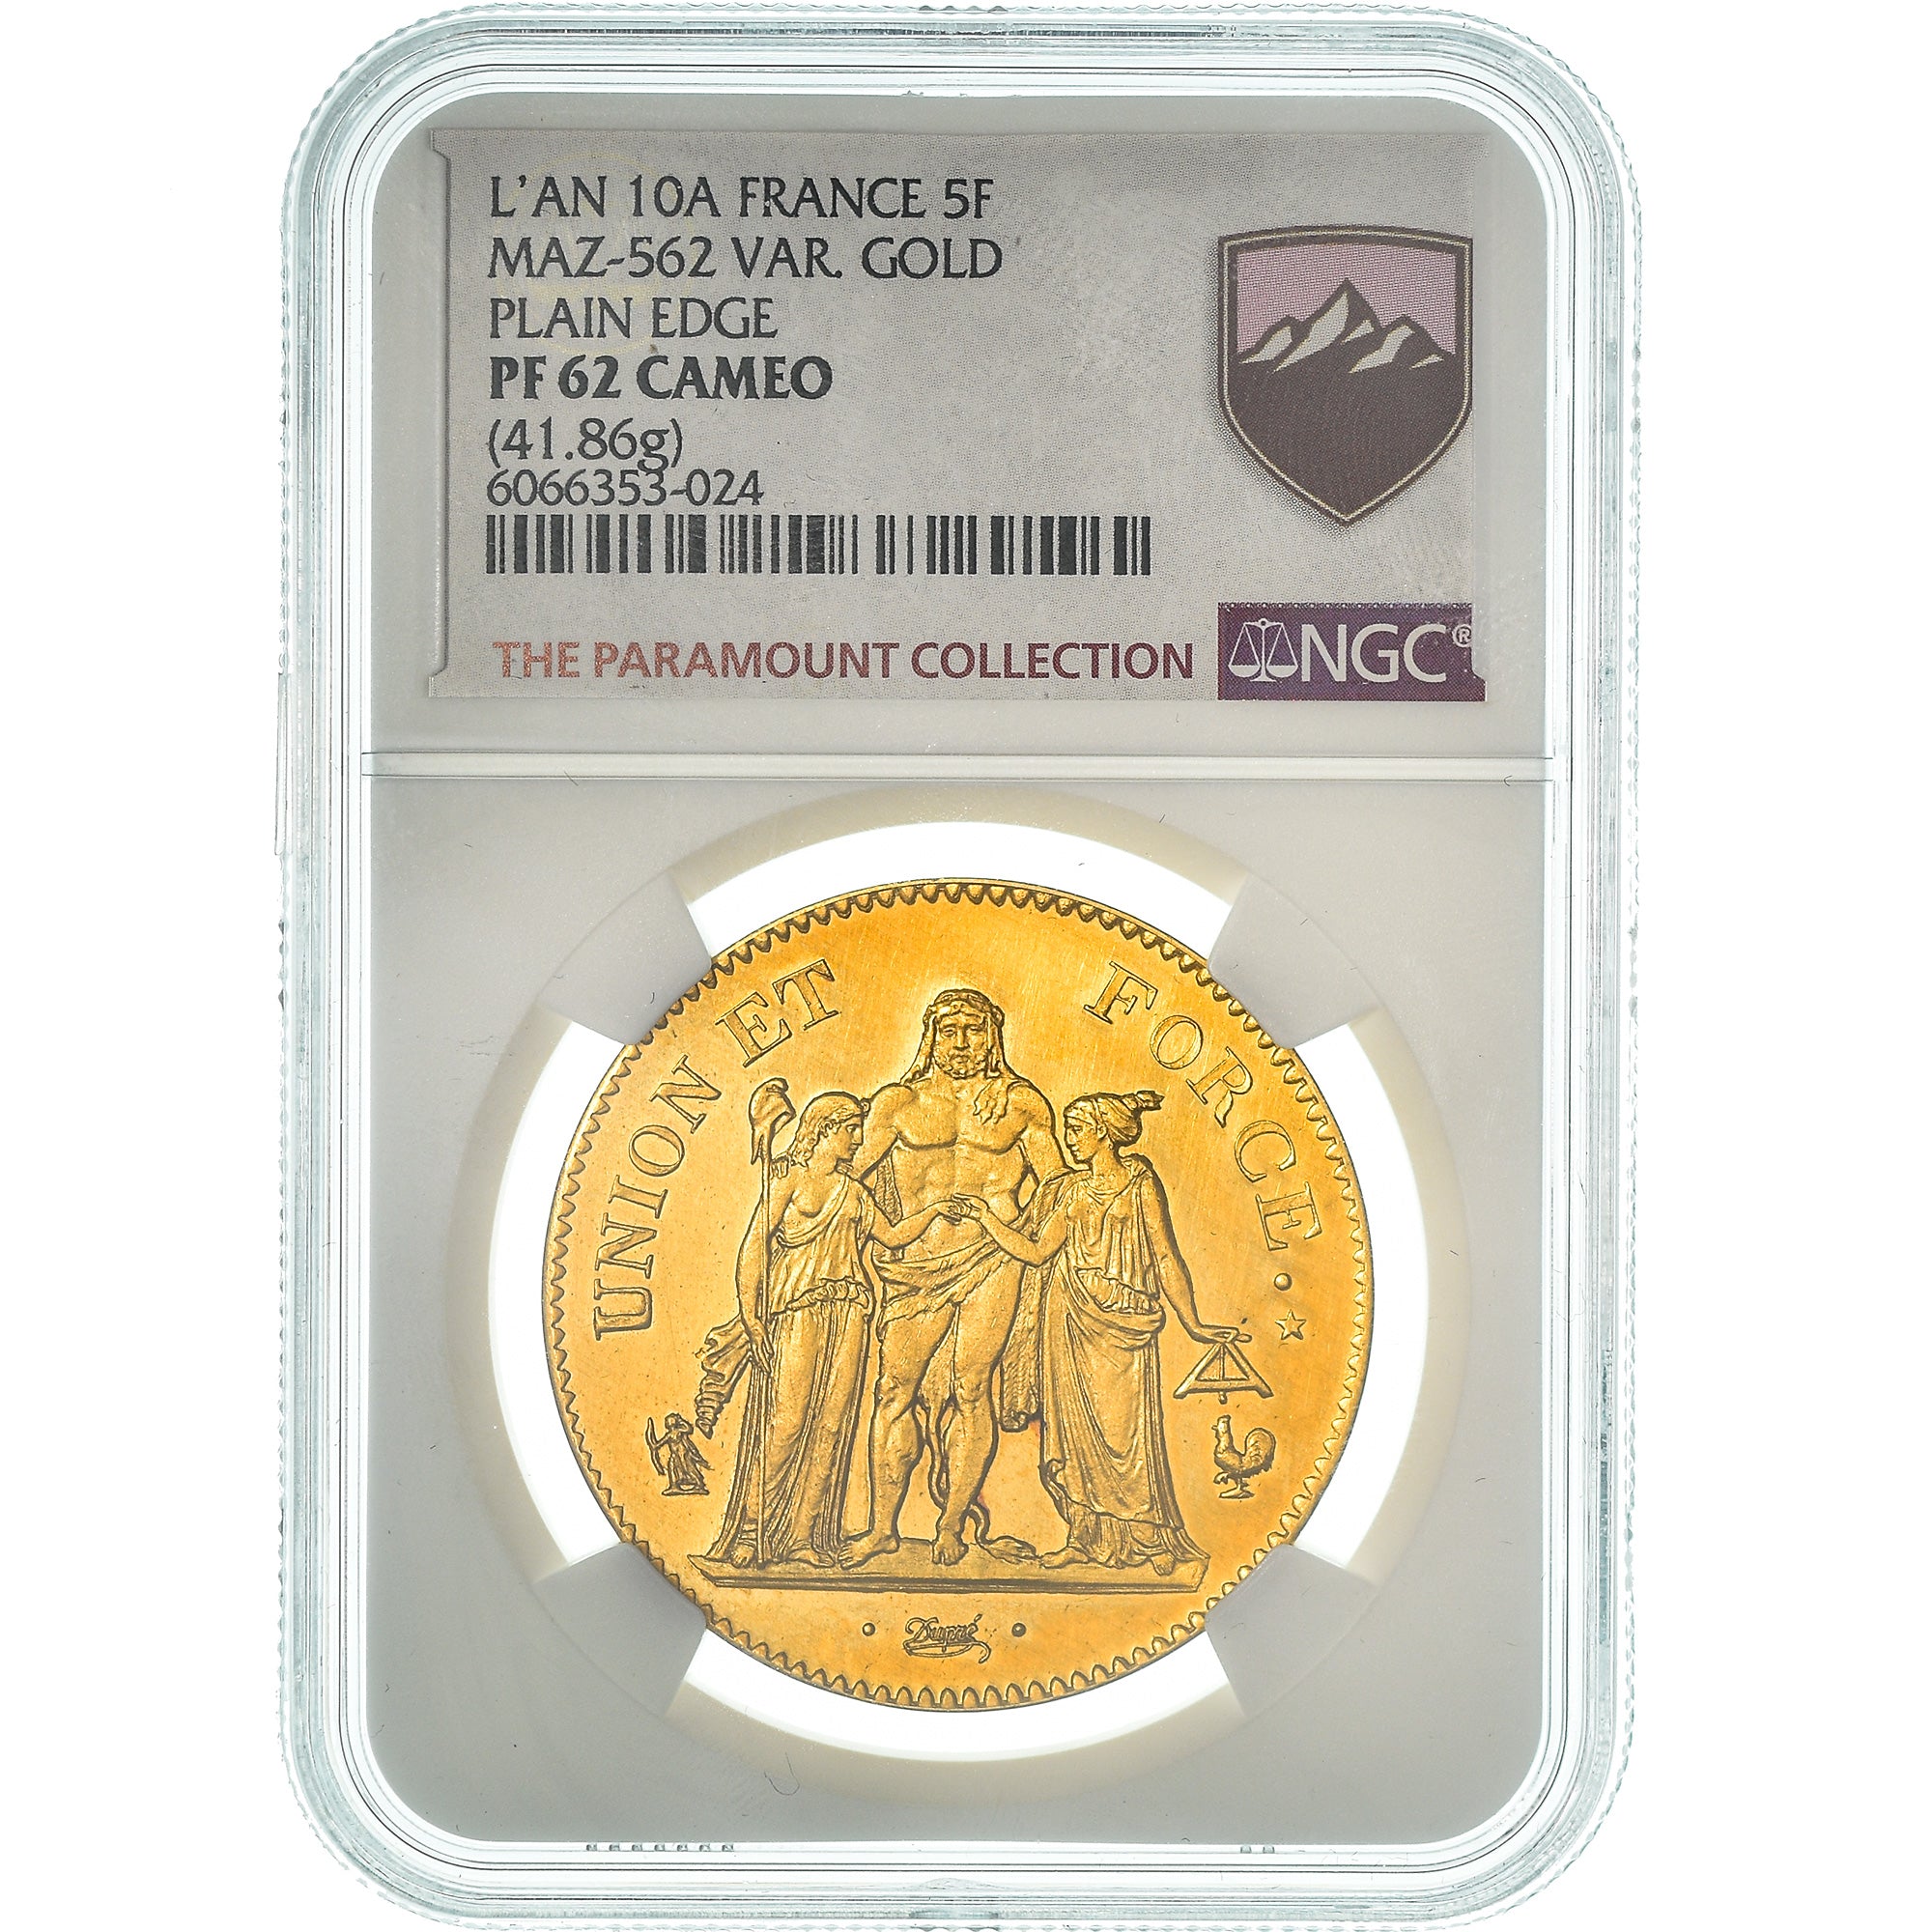 5 Francs - Louis-Philippe I (without I, engraved edge) - France